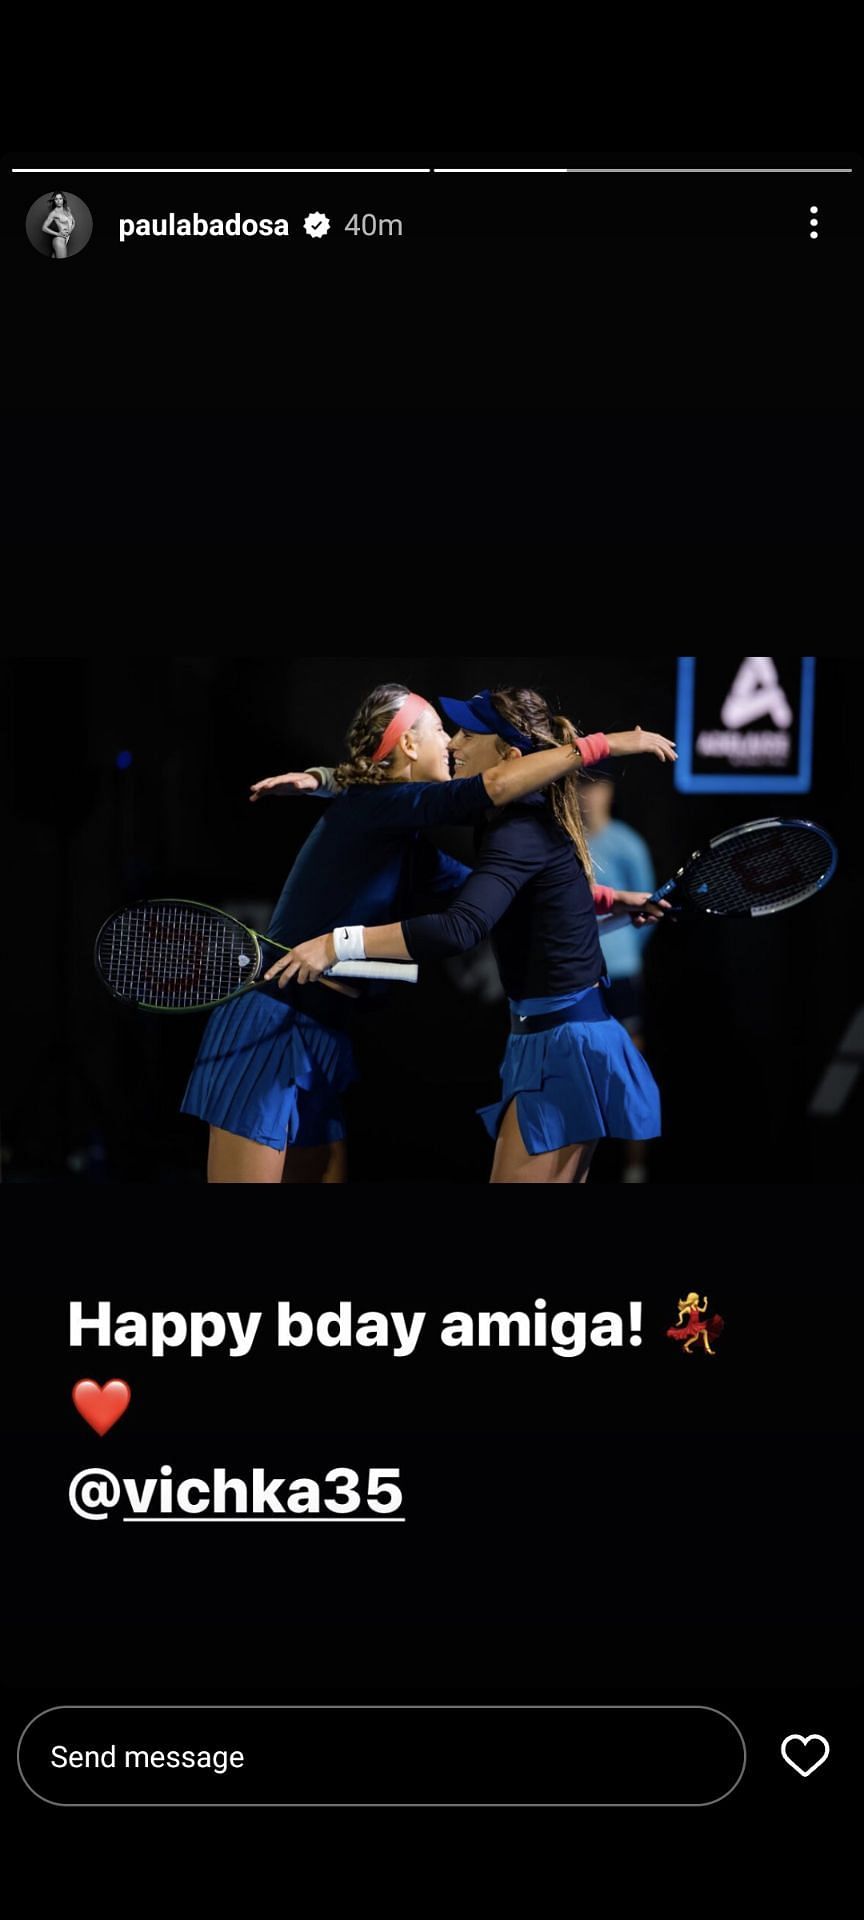 Paula Badosa wished Victoria Azarenka a happy birthday via an Instagram story